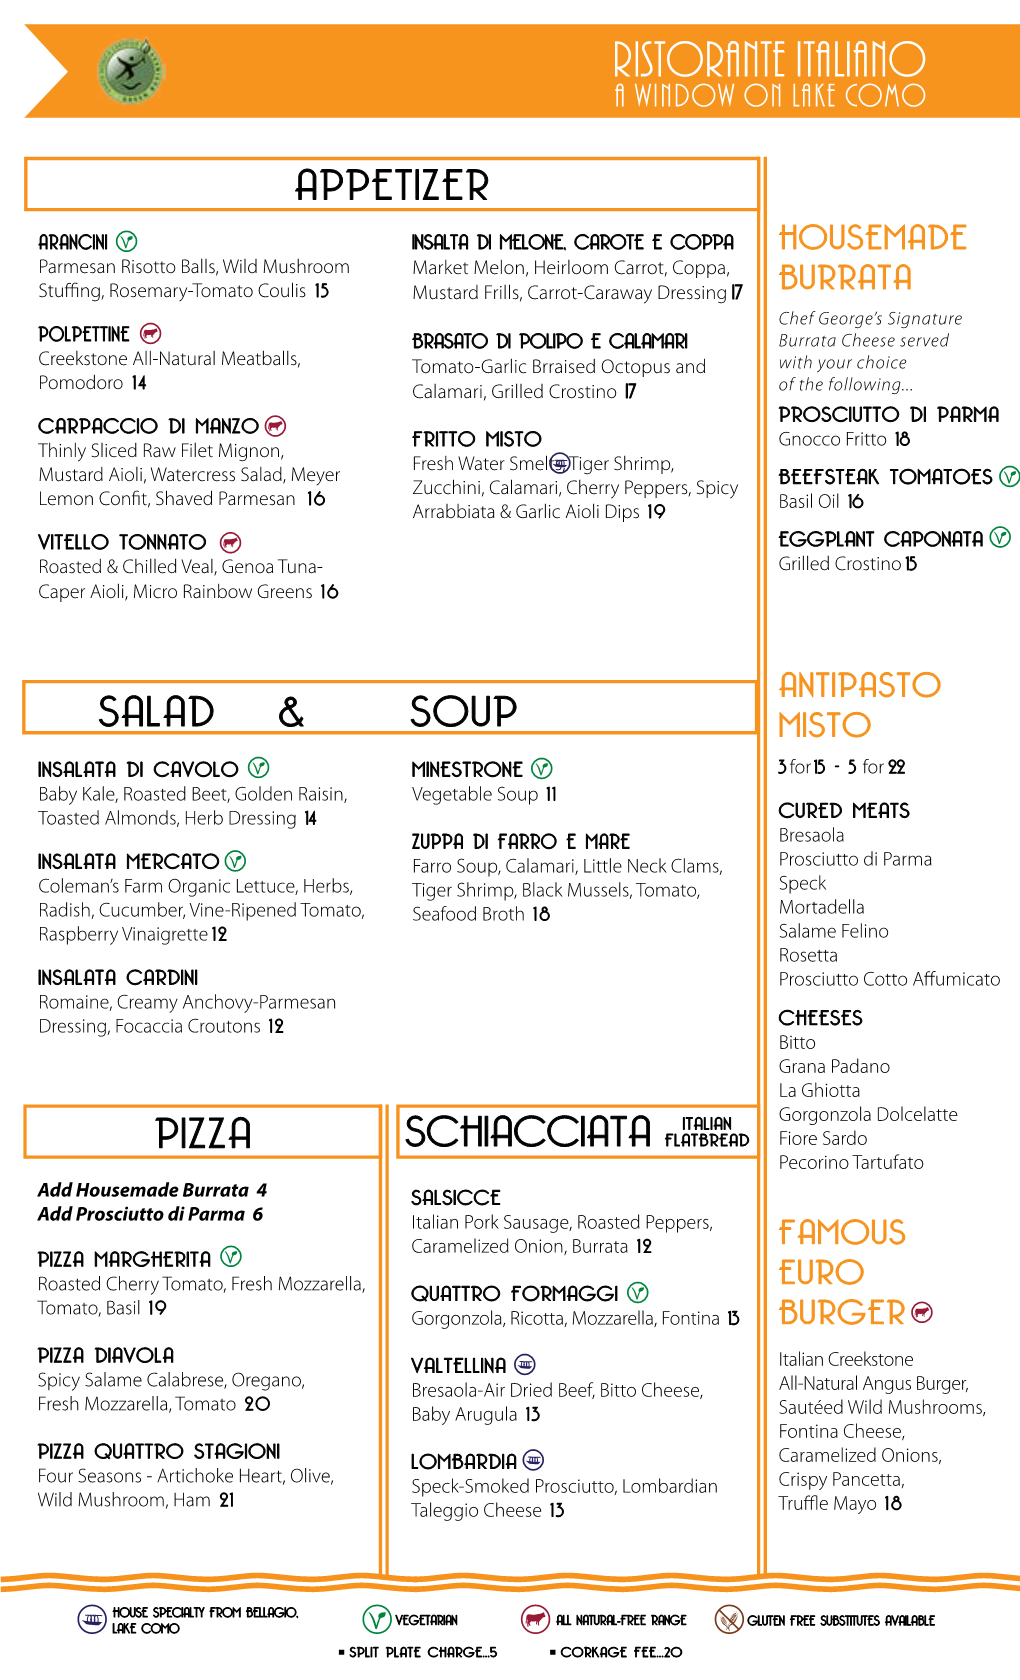 Appetizer Salad & Soup Pizza Schiacciata Italian